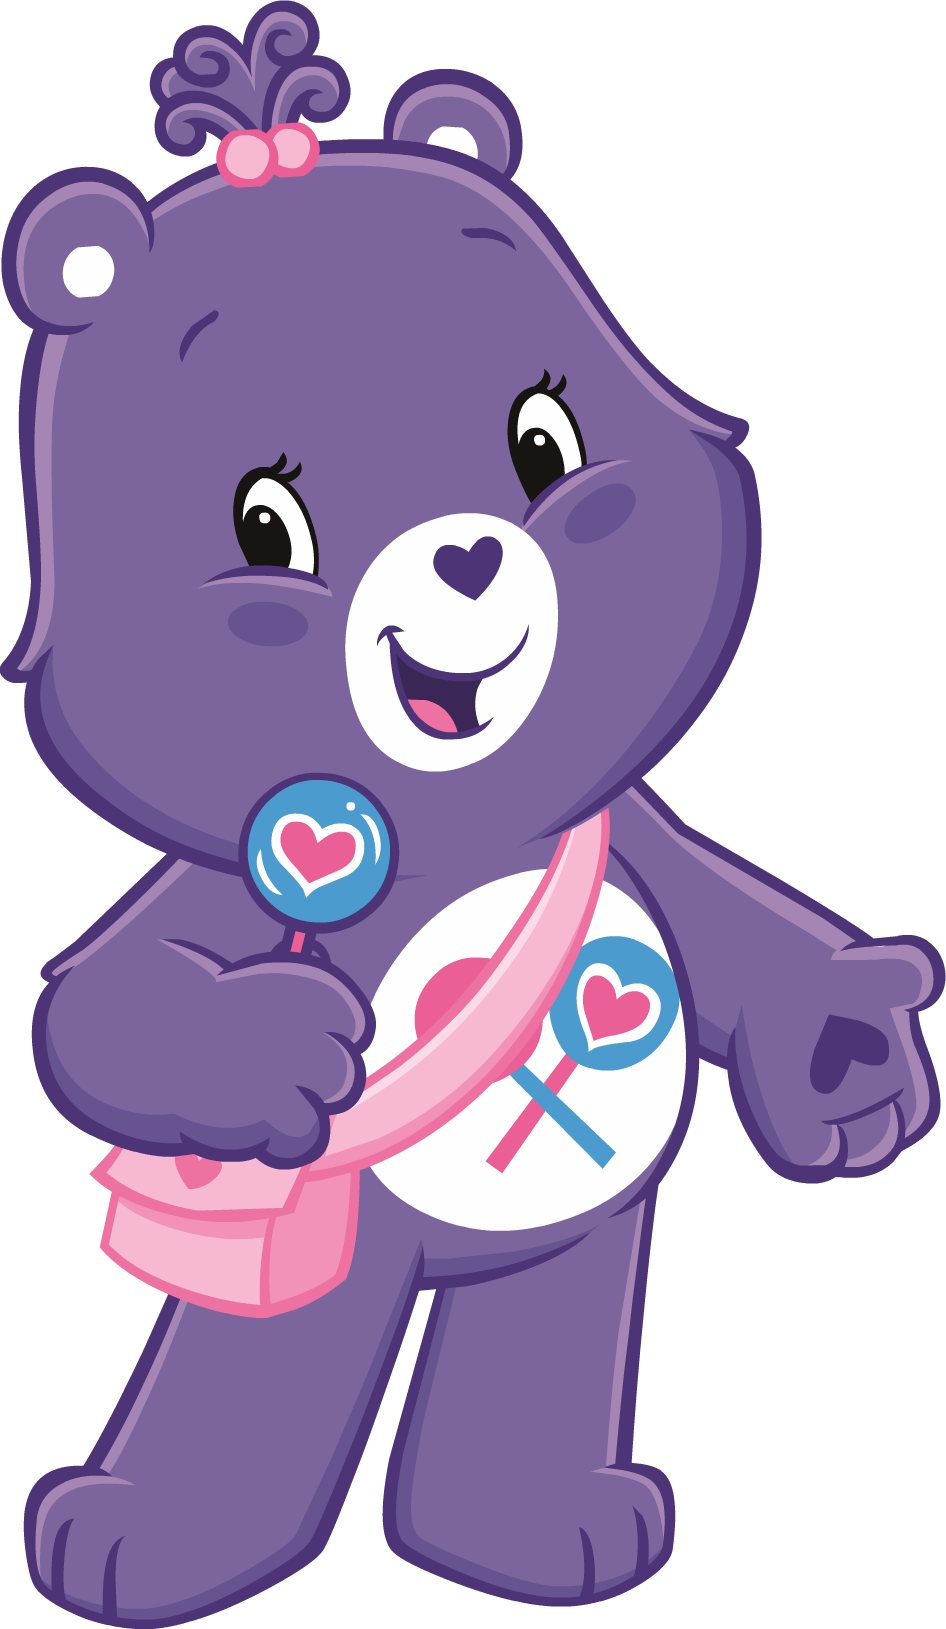 Share bear care bear wiki fandom care bears movie care bears cousins care bear